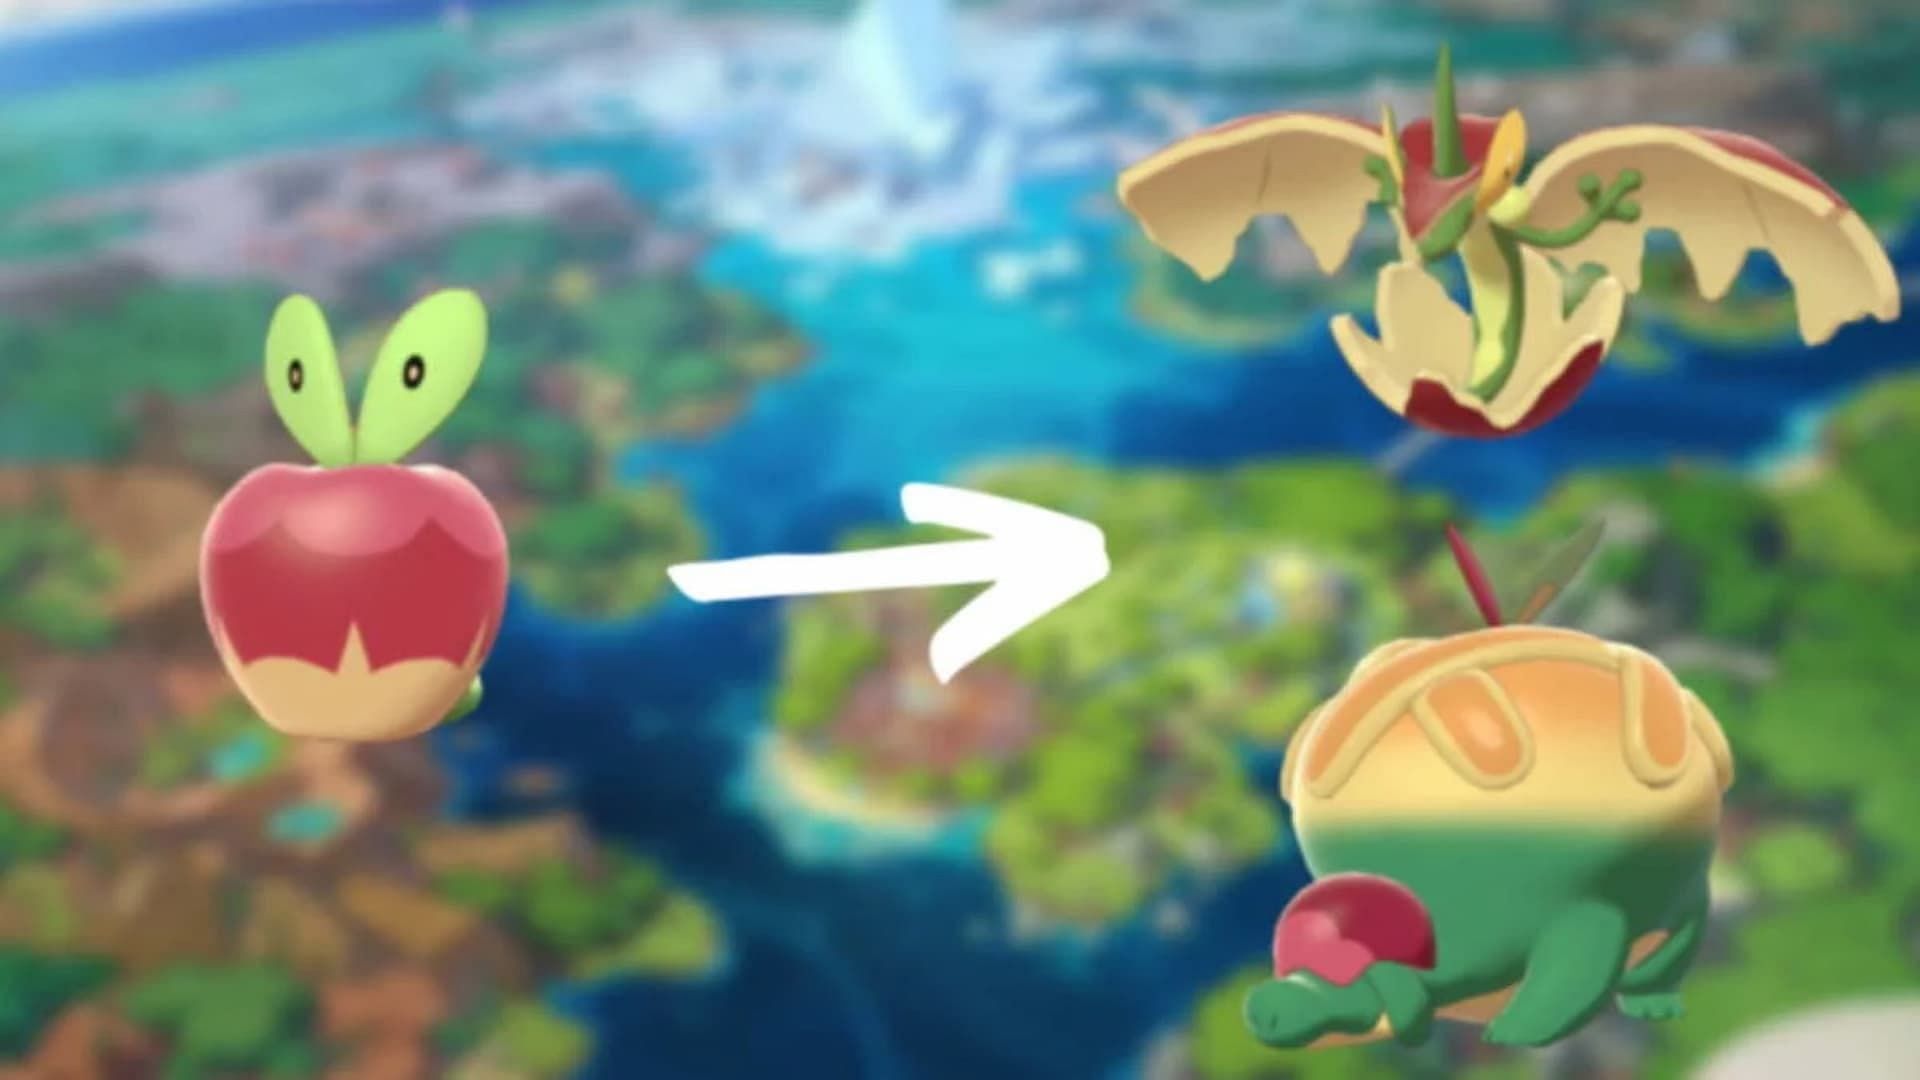 Applin evolves into Flapple or Appletun (Image via The Pokemon Company)